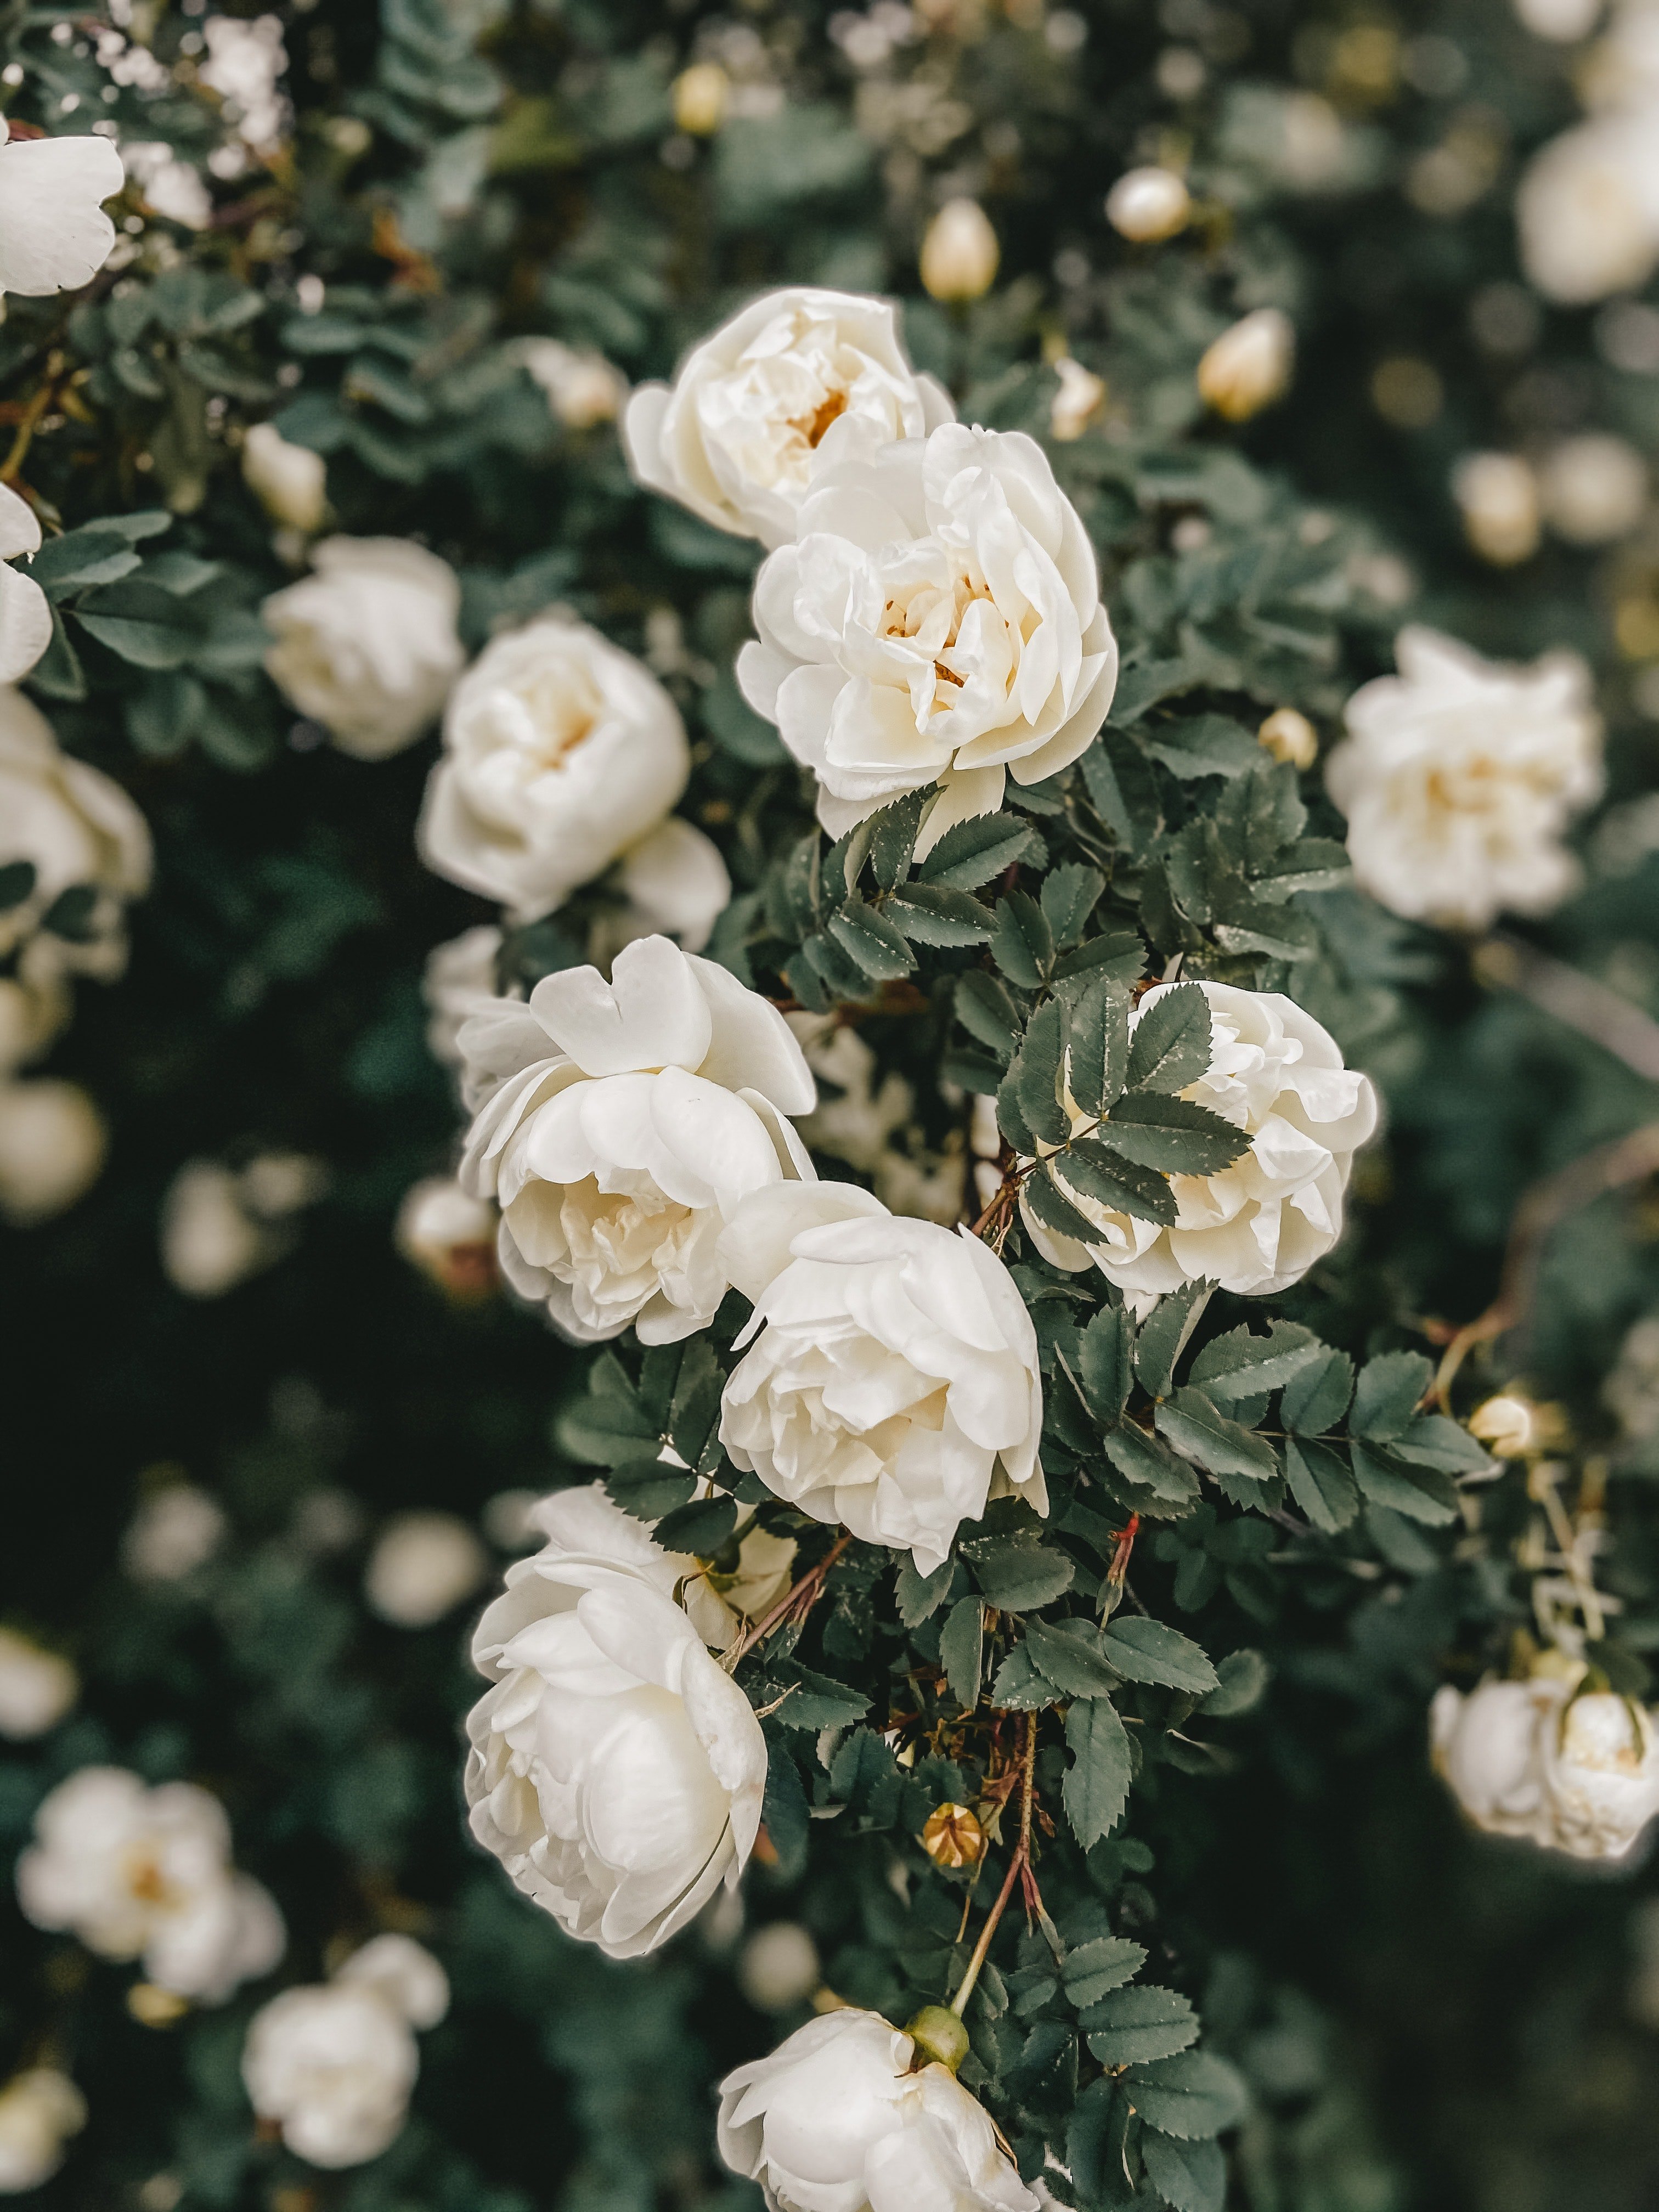 Annabel planted a rose bush for Margaret. | Source: Pexels